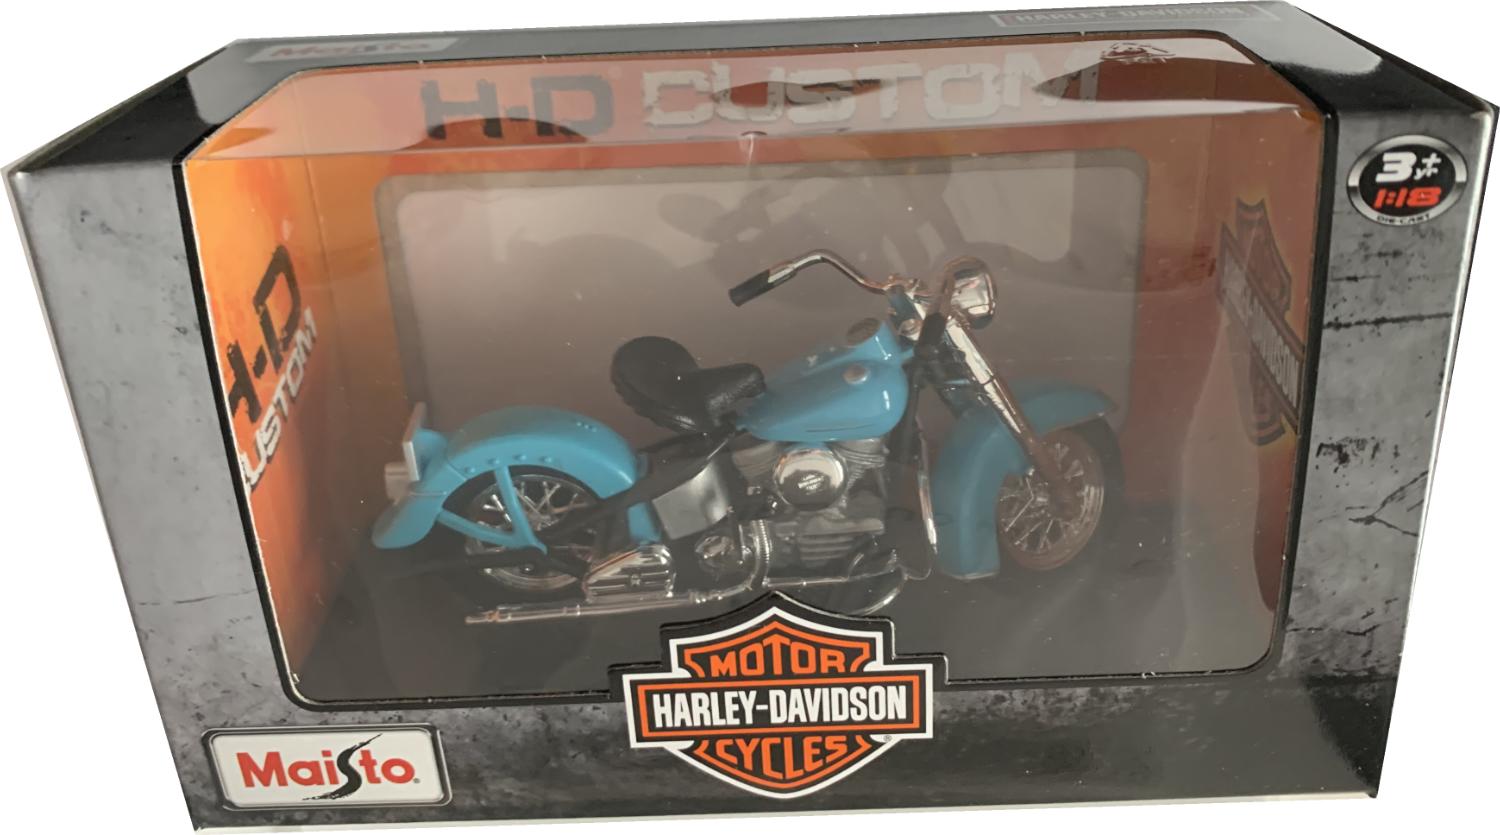 Harley Davidson 1953 74FL Hydra Glide in light blue 1:18 scale model from Maisto